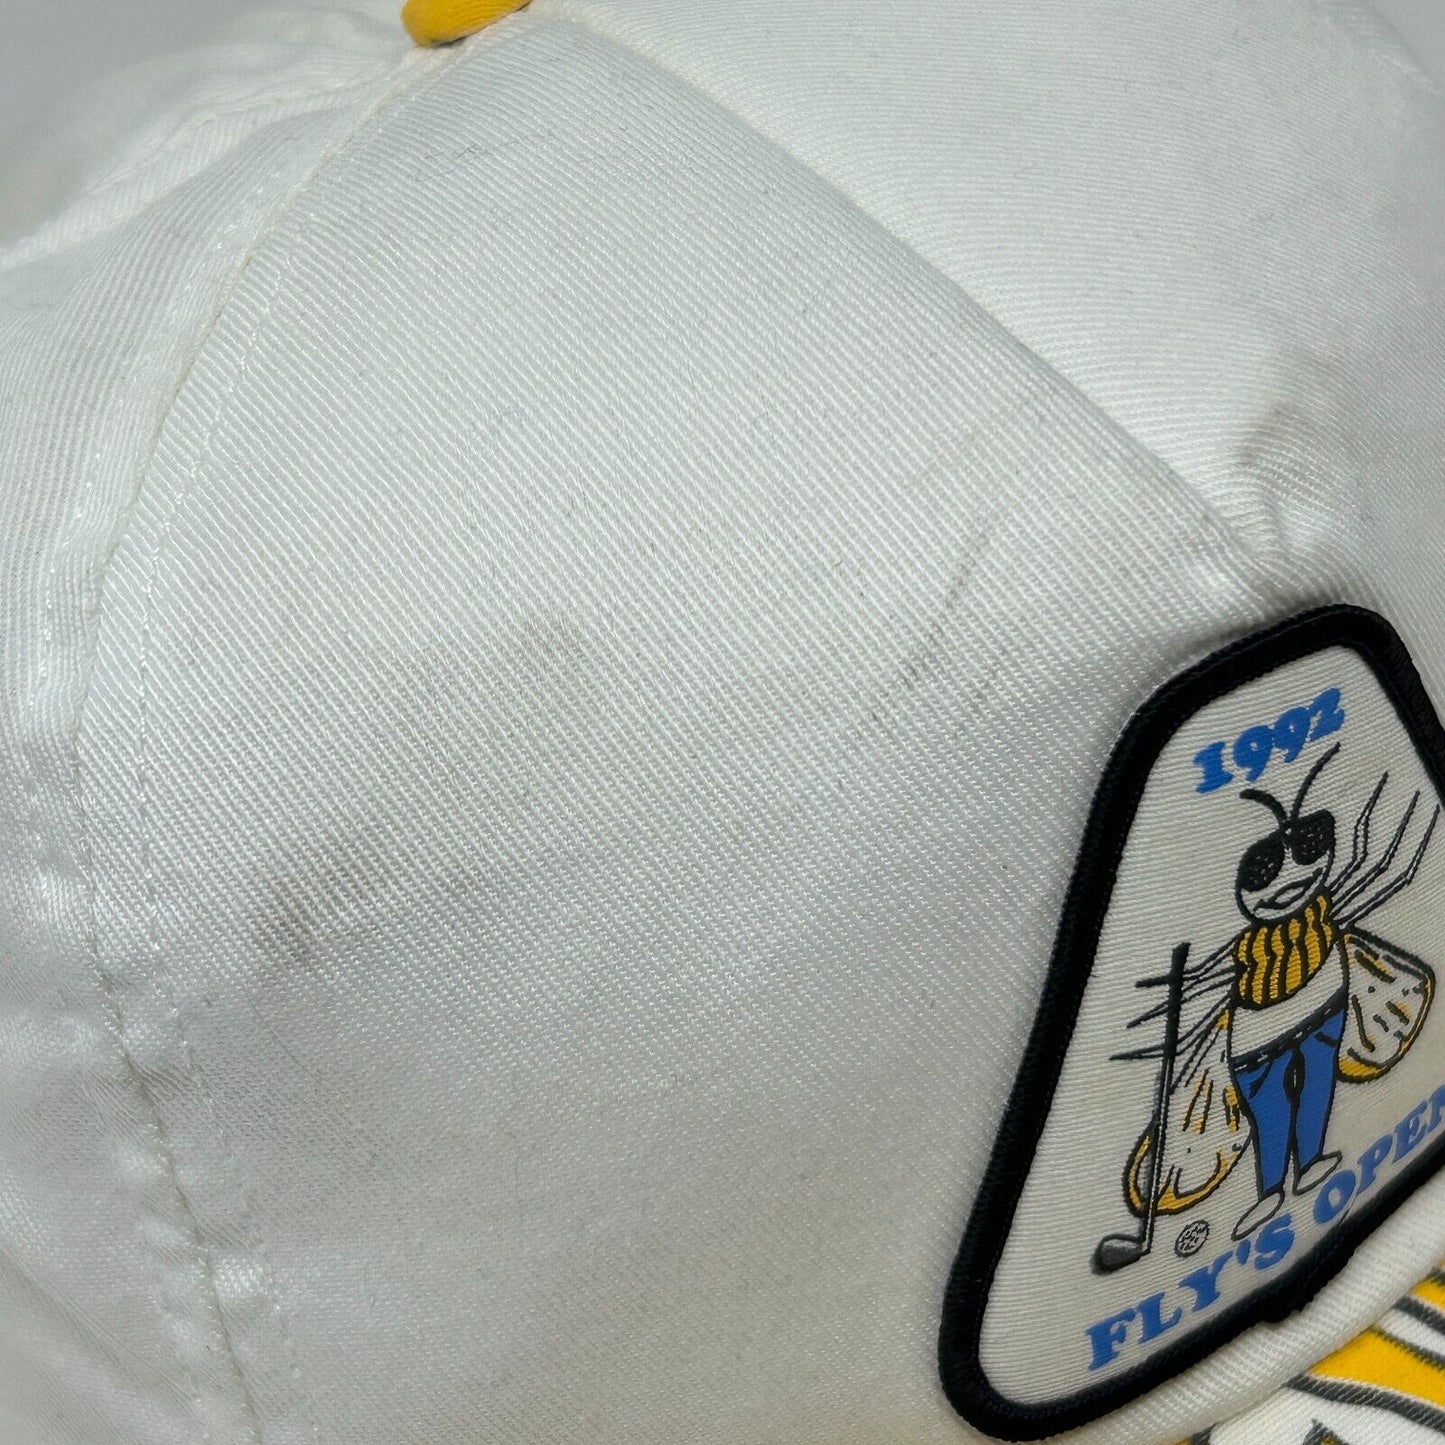 Flys Open Golf Tournament Snapback Hat Vintage 90s Golfing Golfer Baseball Cap